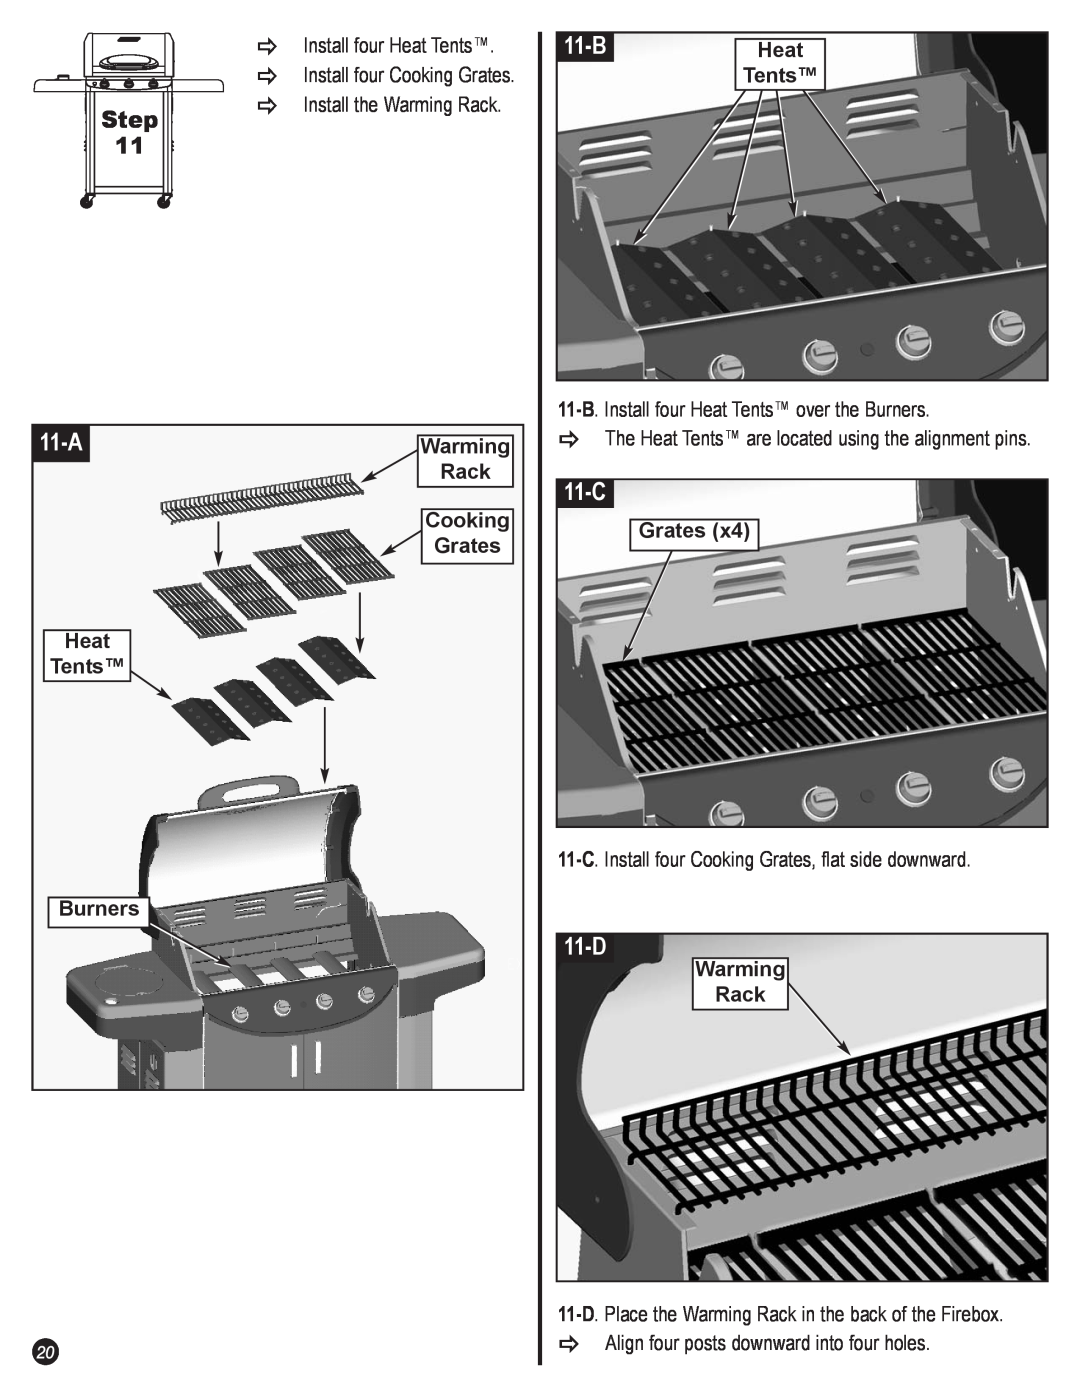 Coleman 5400 LP manual 11-A, 11-B, 11-C, 11-D, Cooking Grates Heat Tents Burners, Warming Rack, Step 